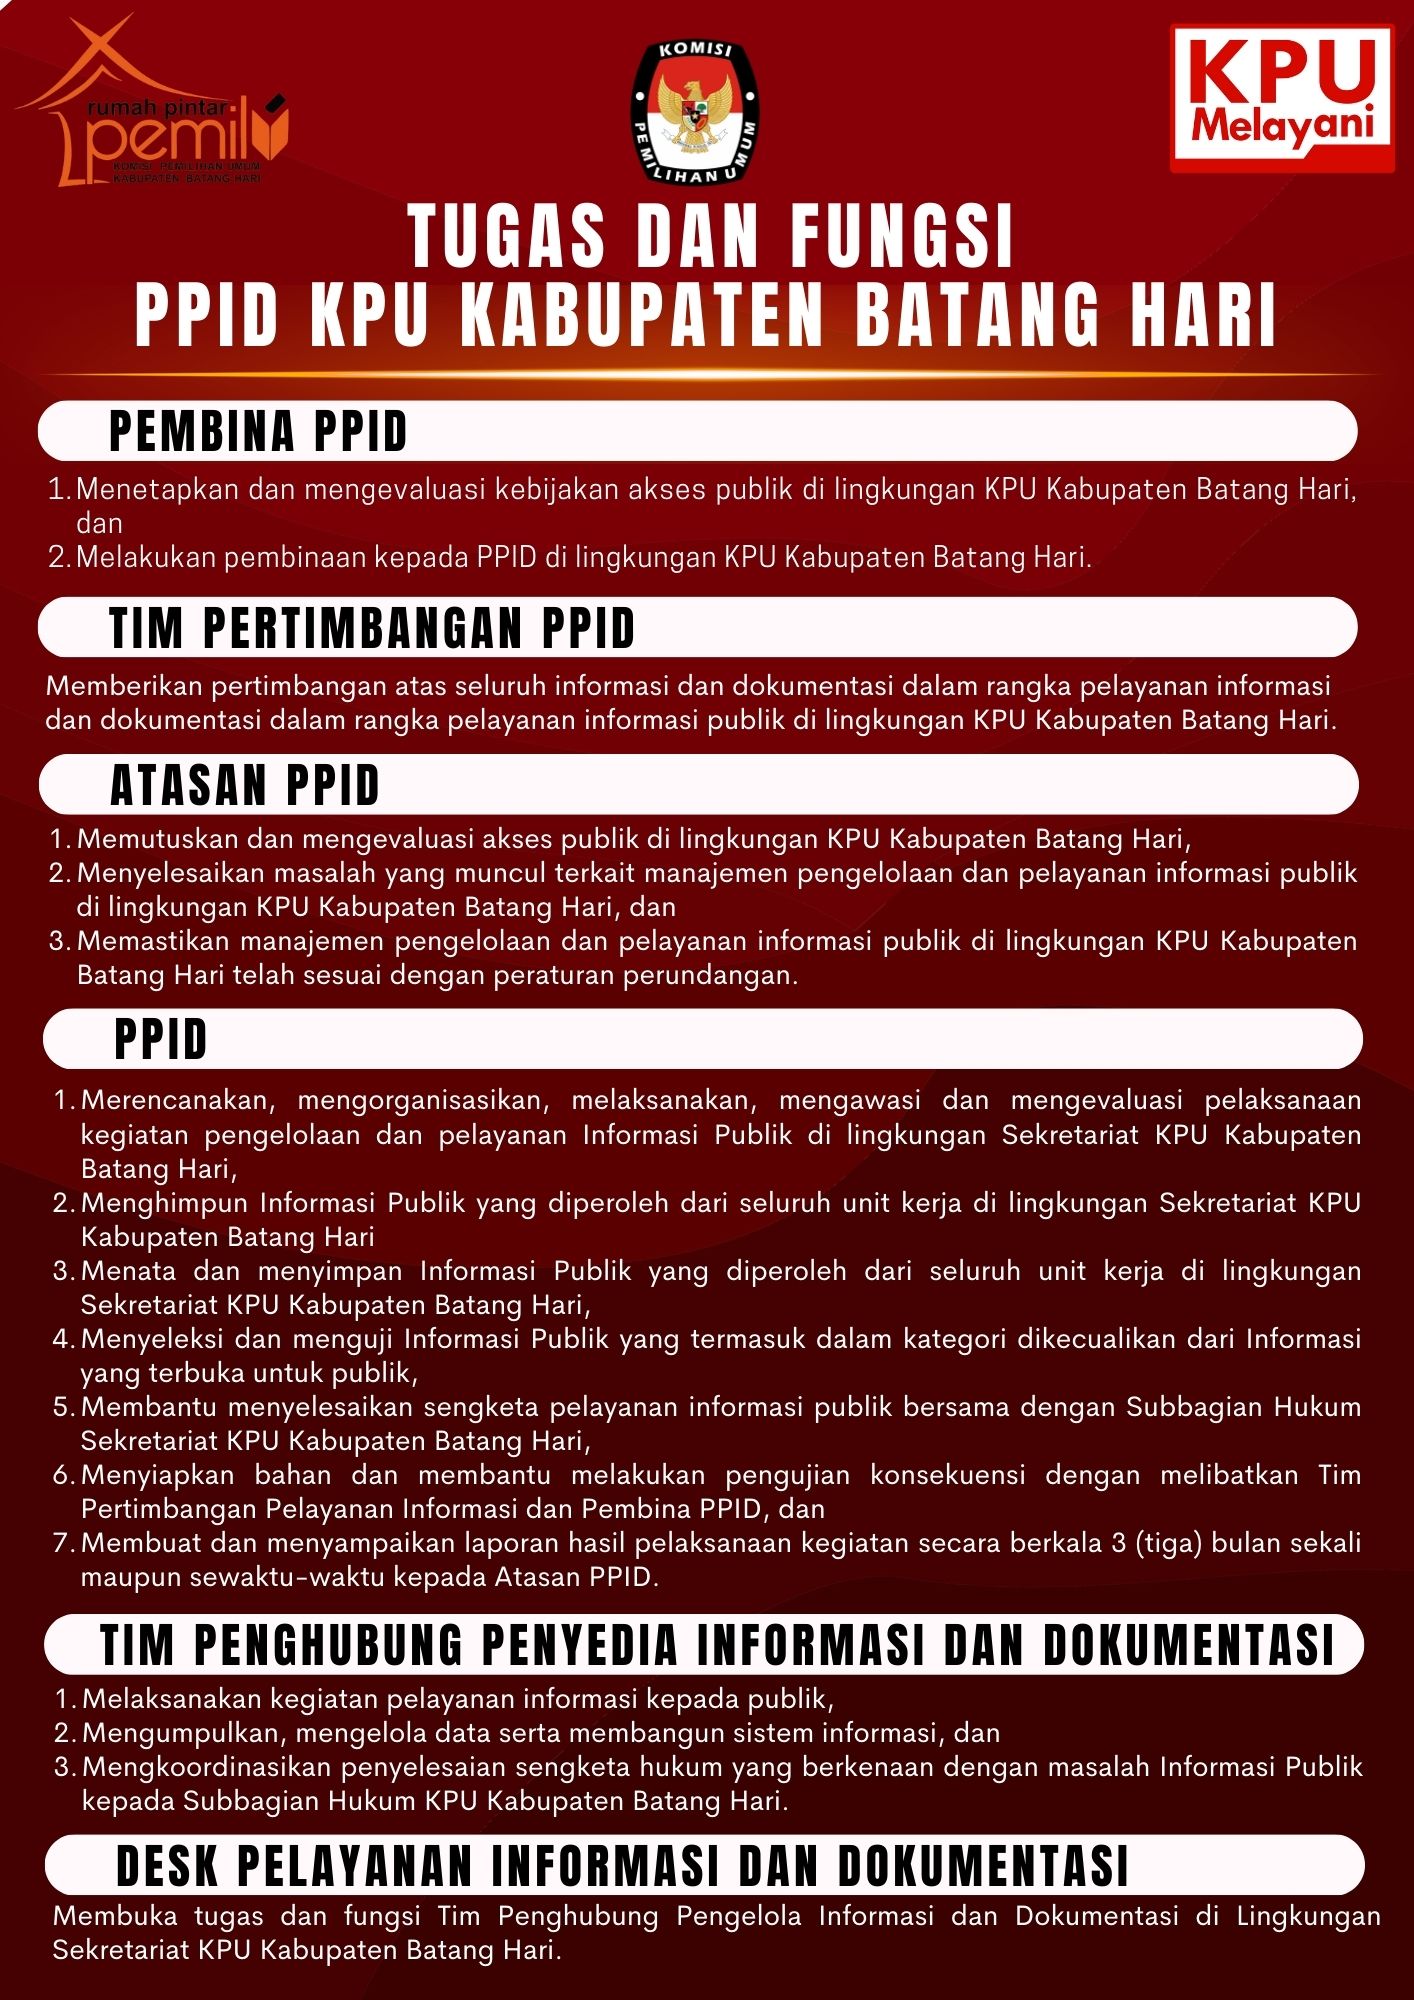 Tugas dan Fungsi PPID KPU Kabupaten Batang Hari